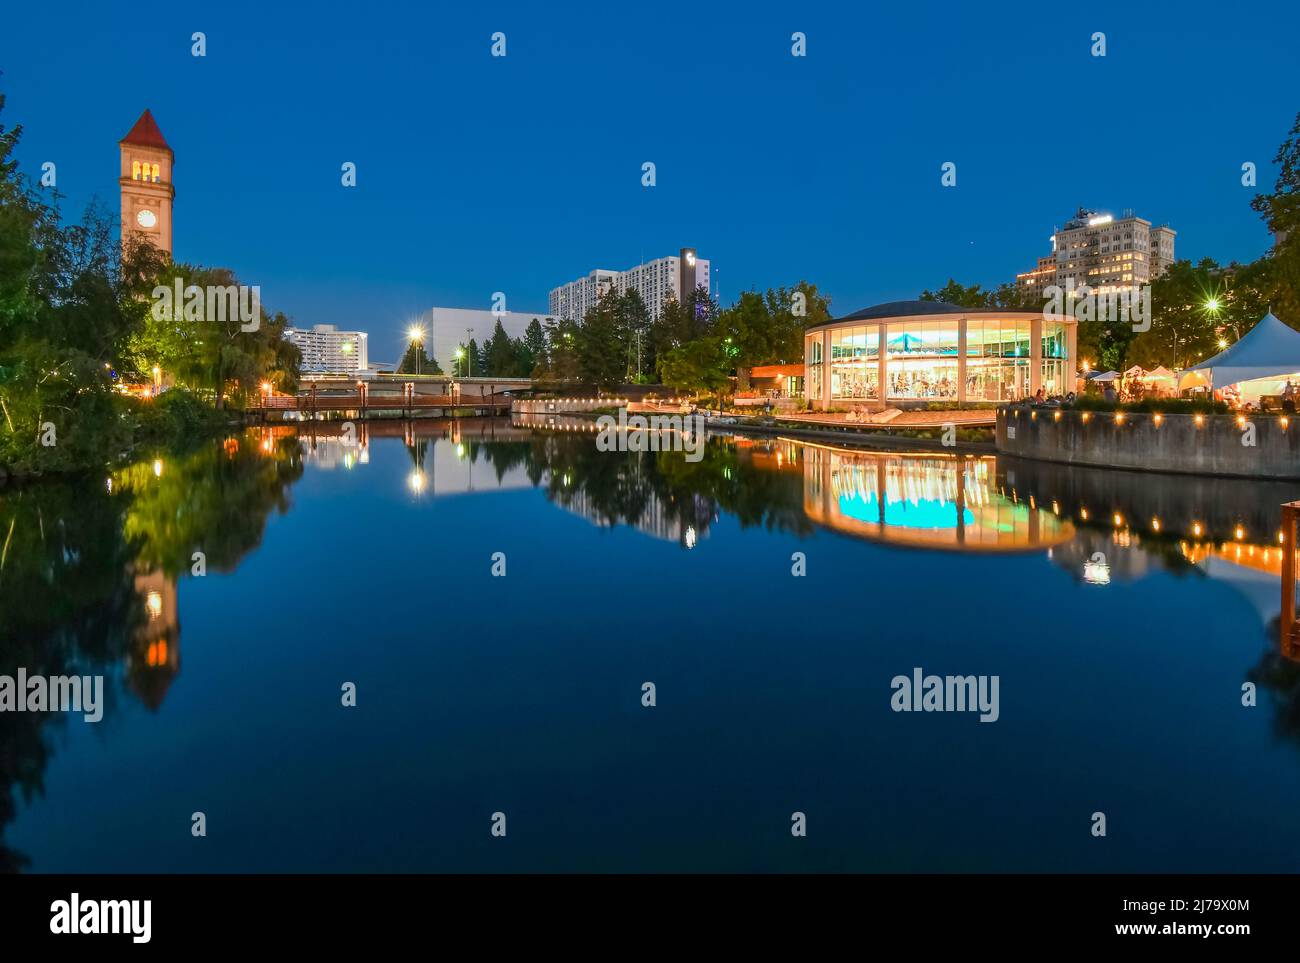 The Clock Tower illuminated next to the Spokane River in the Riverfront Park area of downtown Spokane, Washington, USA late at night. Stock Photo